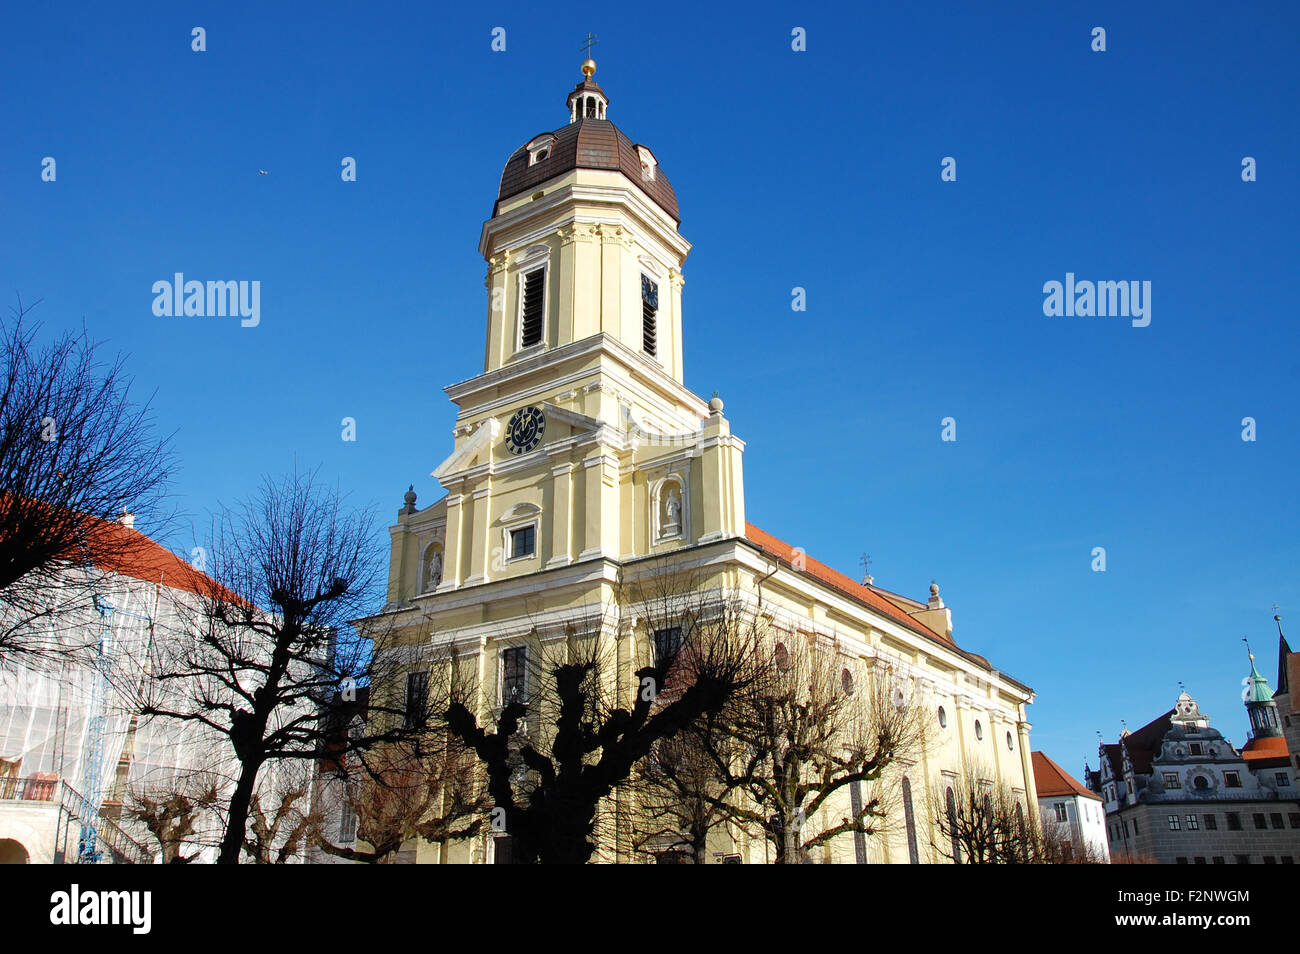 The Hofkirche in Neuburg an der Donau, Germany Stock Photo